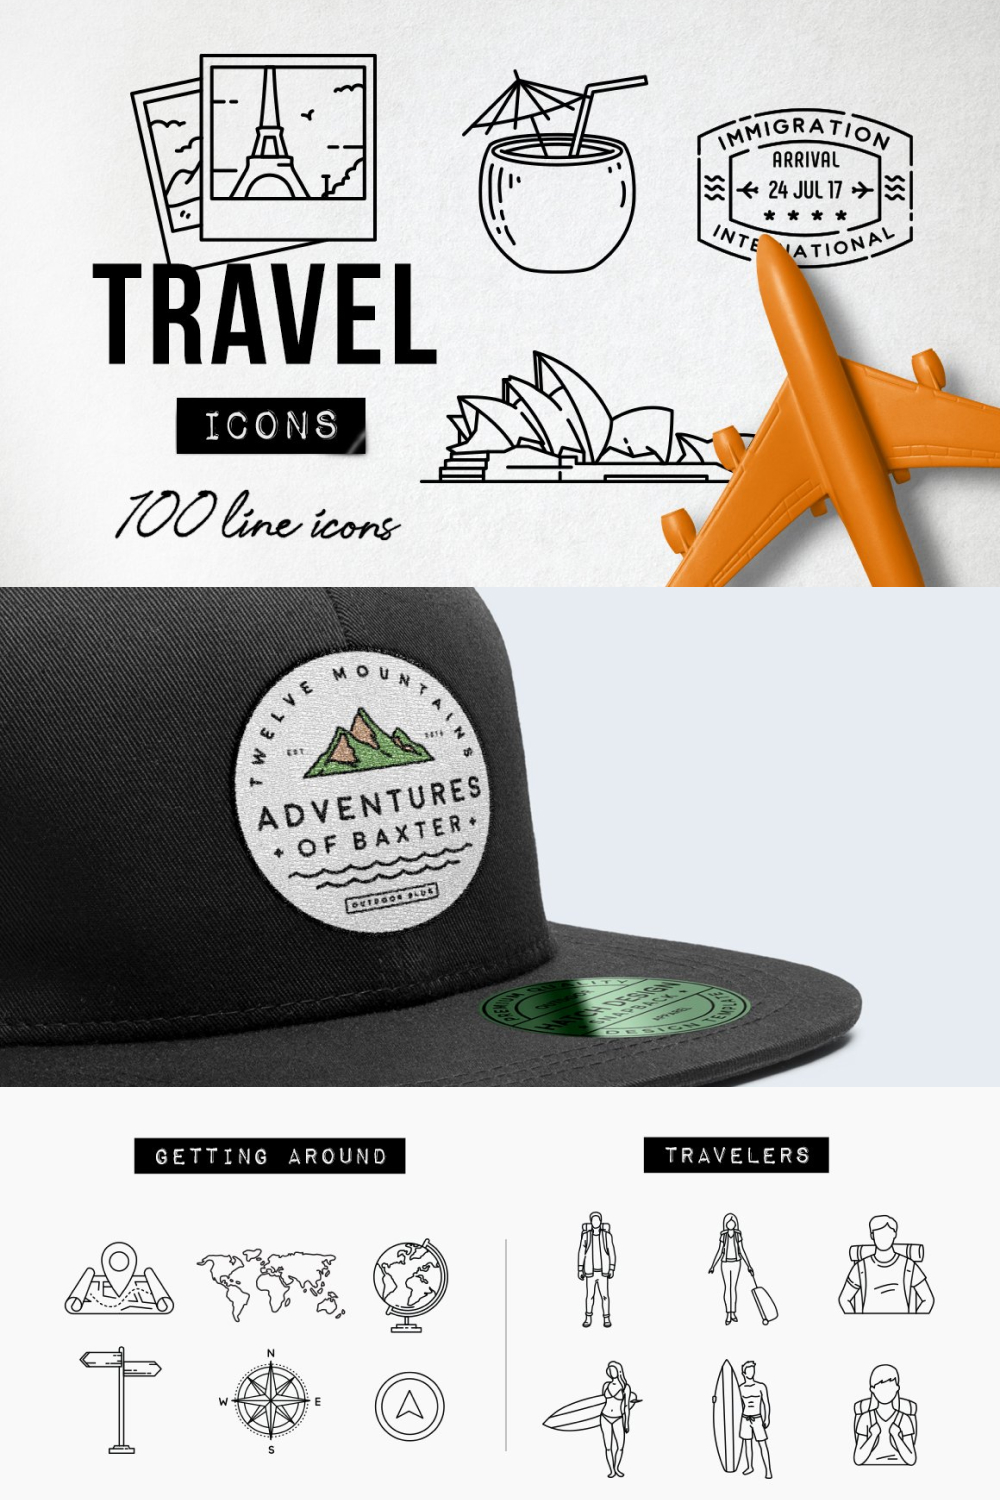 100 Travel Icons Set - Expanded - Pinterest.